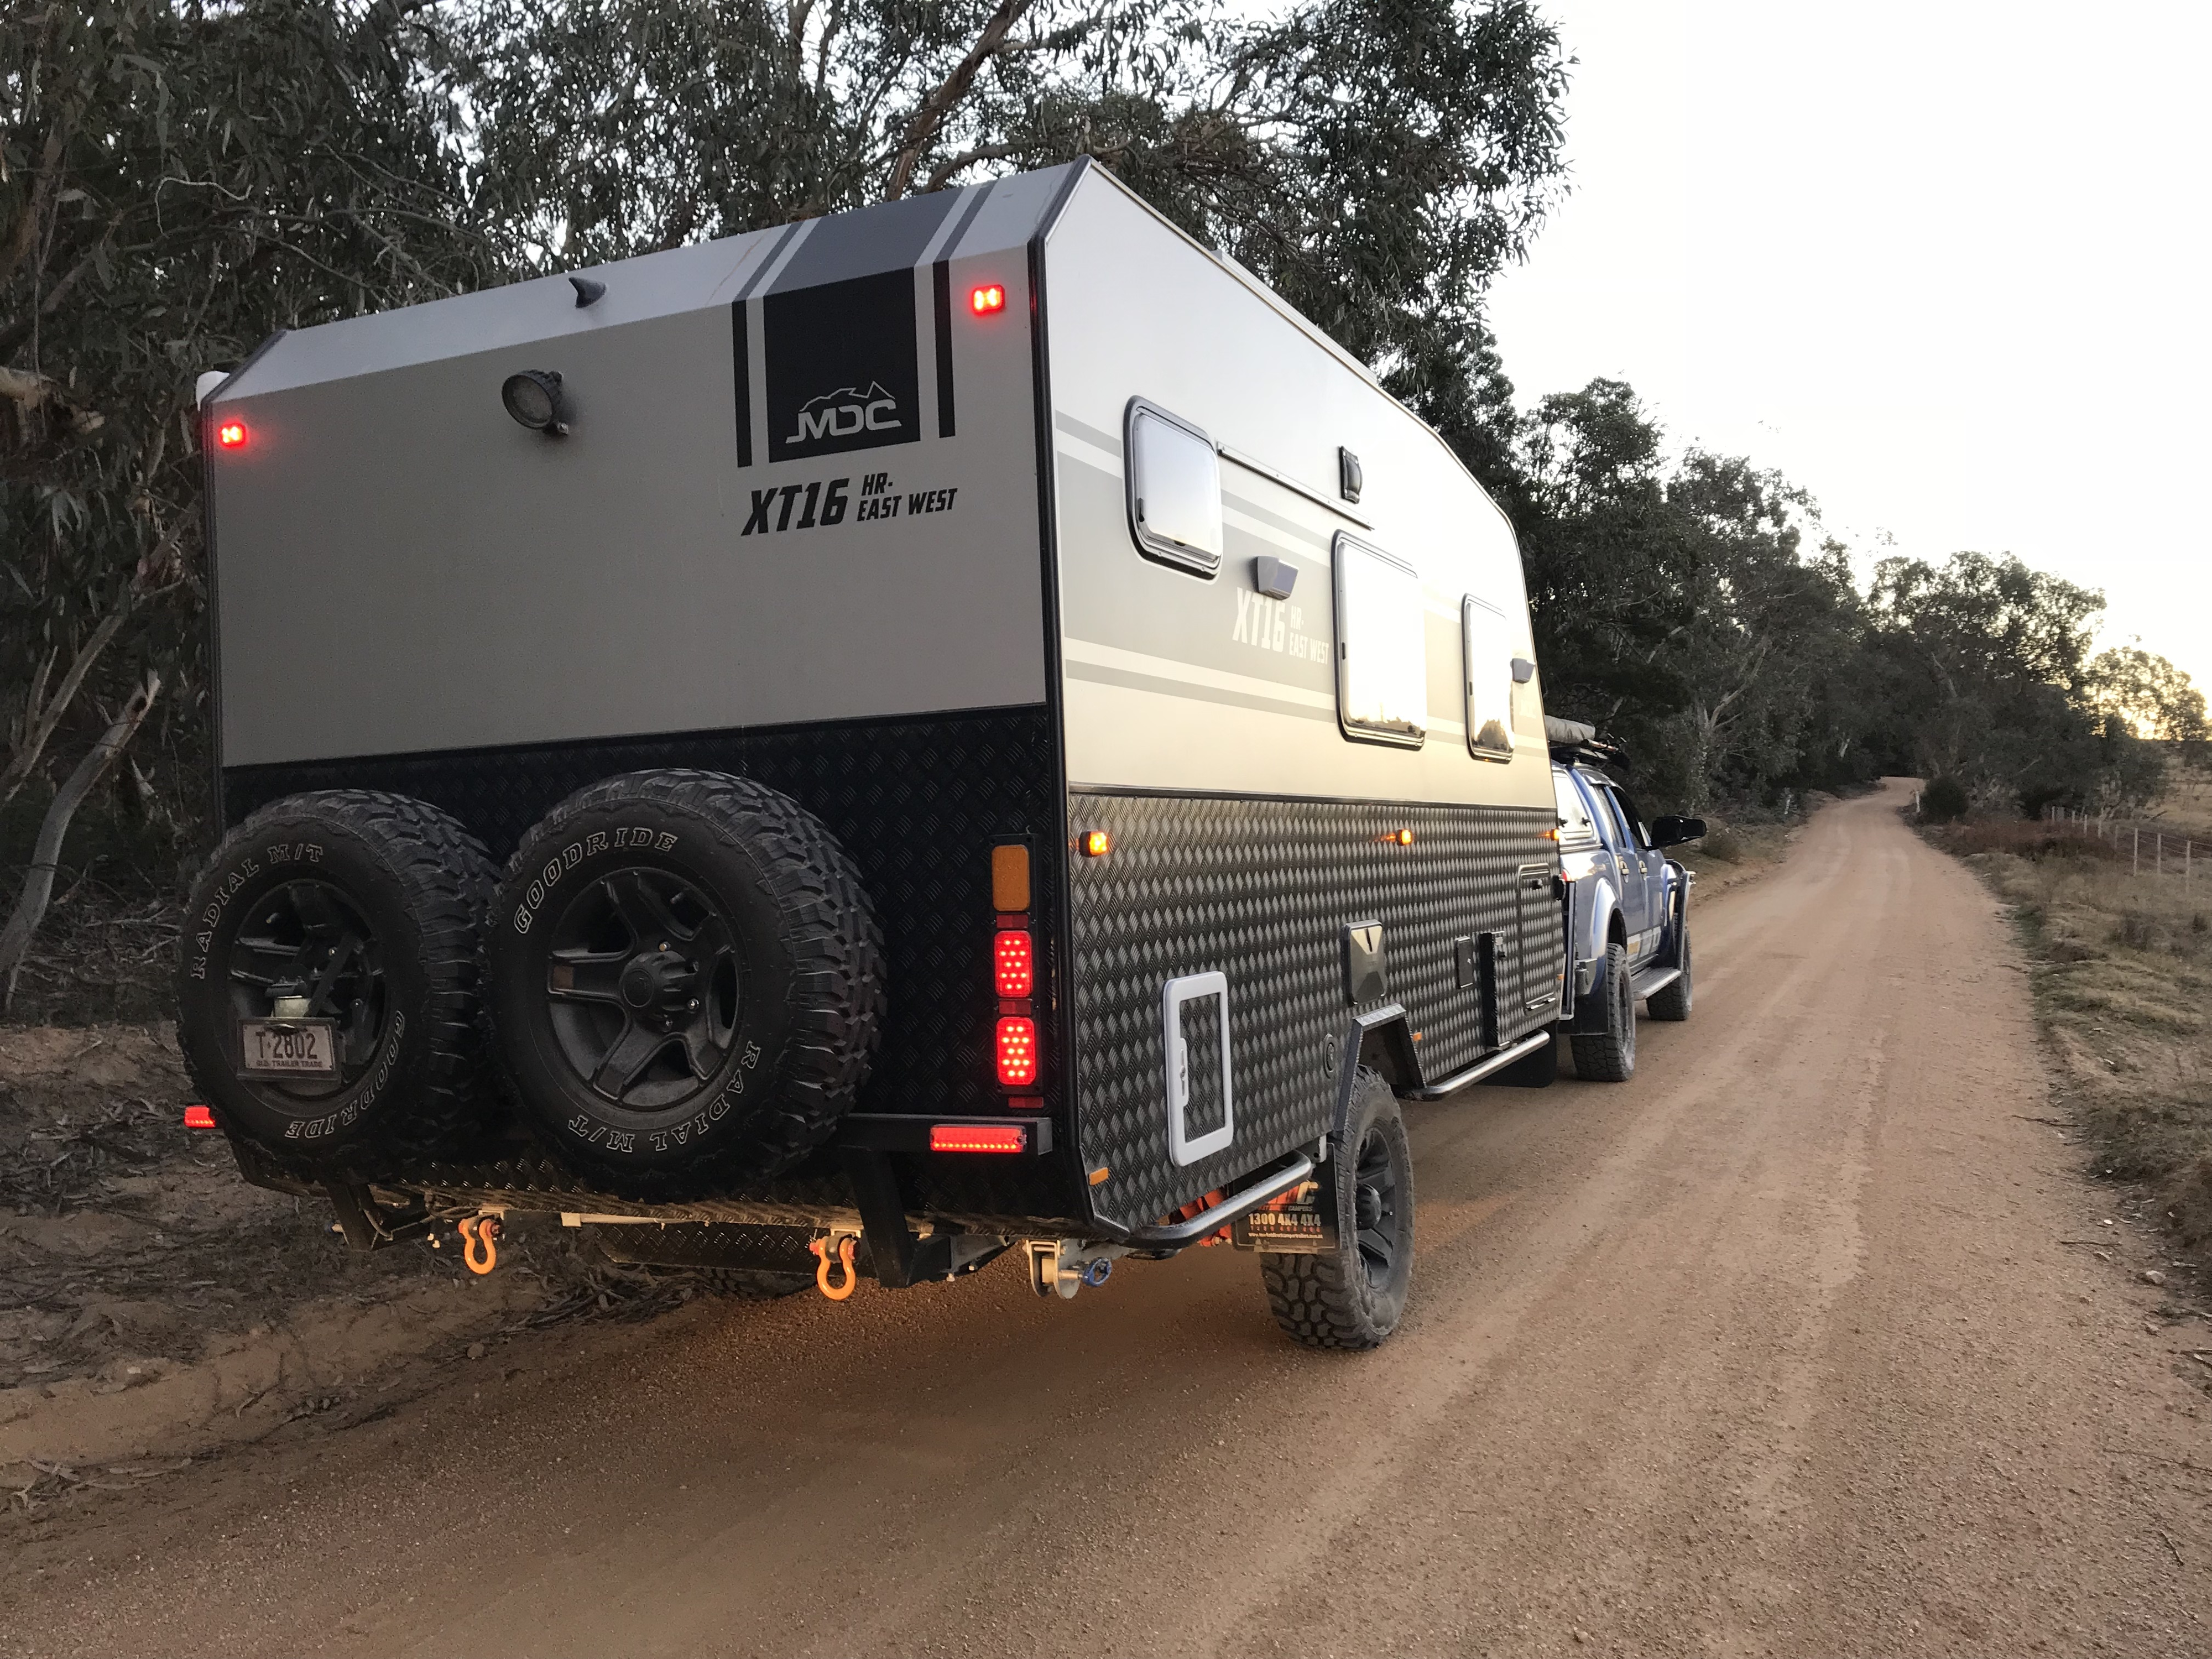 Road Trips Australia Episode 12